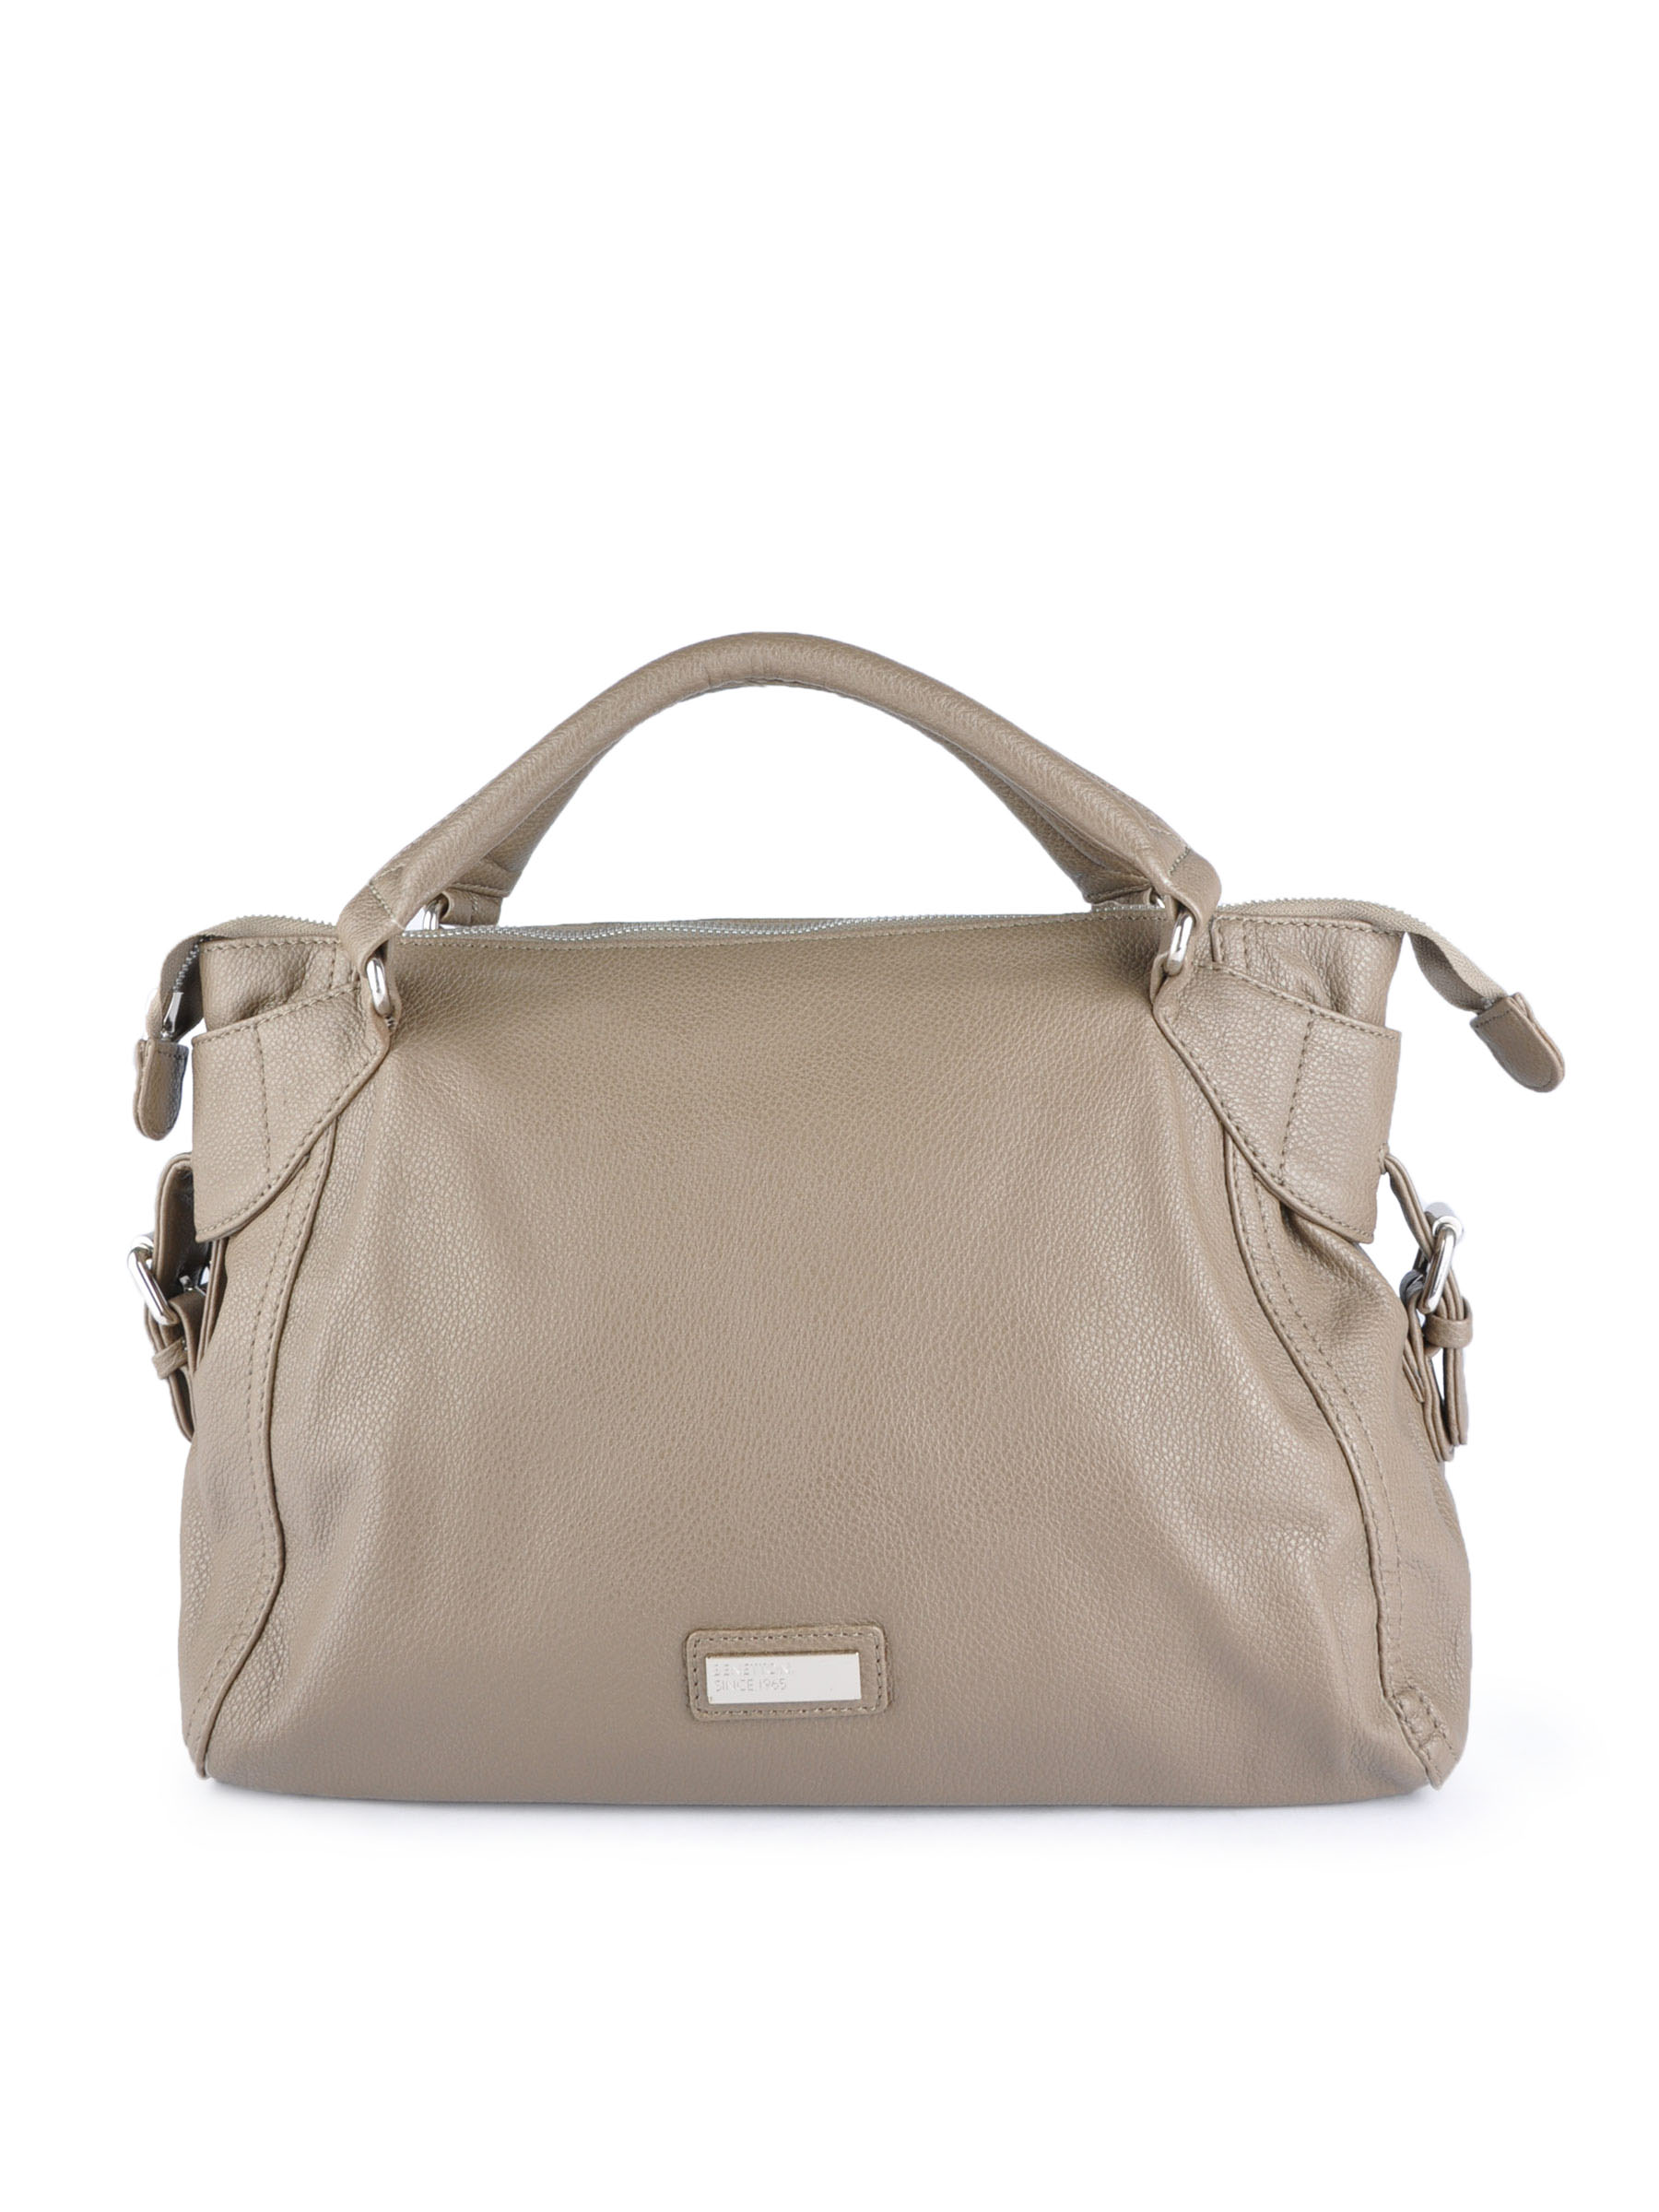 United Colors of Benetton Women Solid Brown Handbags